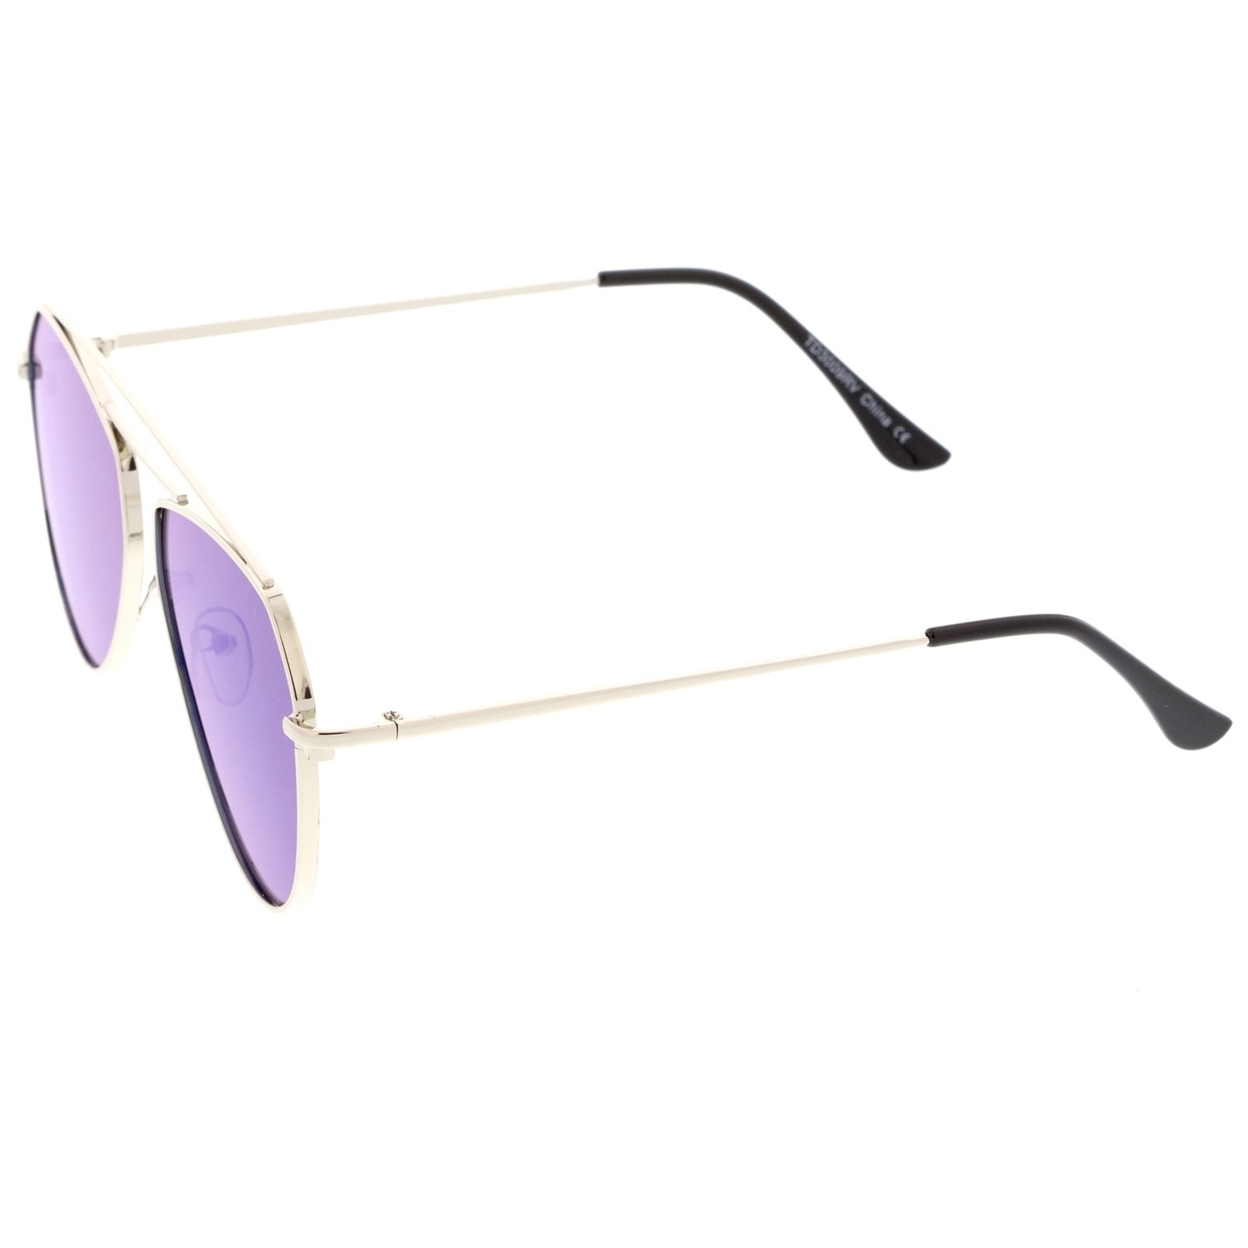 Modern Metal Frame Double Bridge Colored Mirror Flat Lens Aviator Sunglasses 52mm - Silver / Blue Mirror